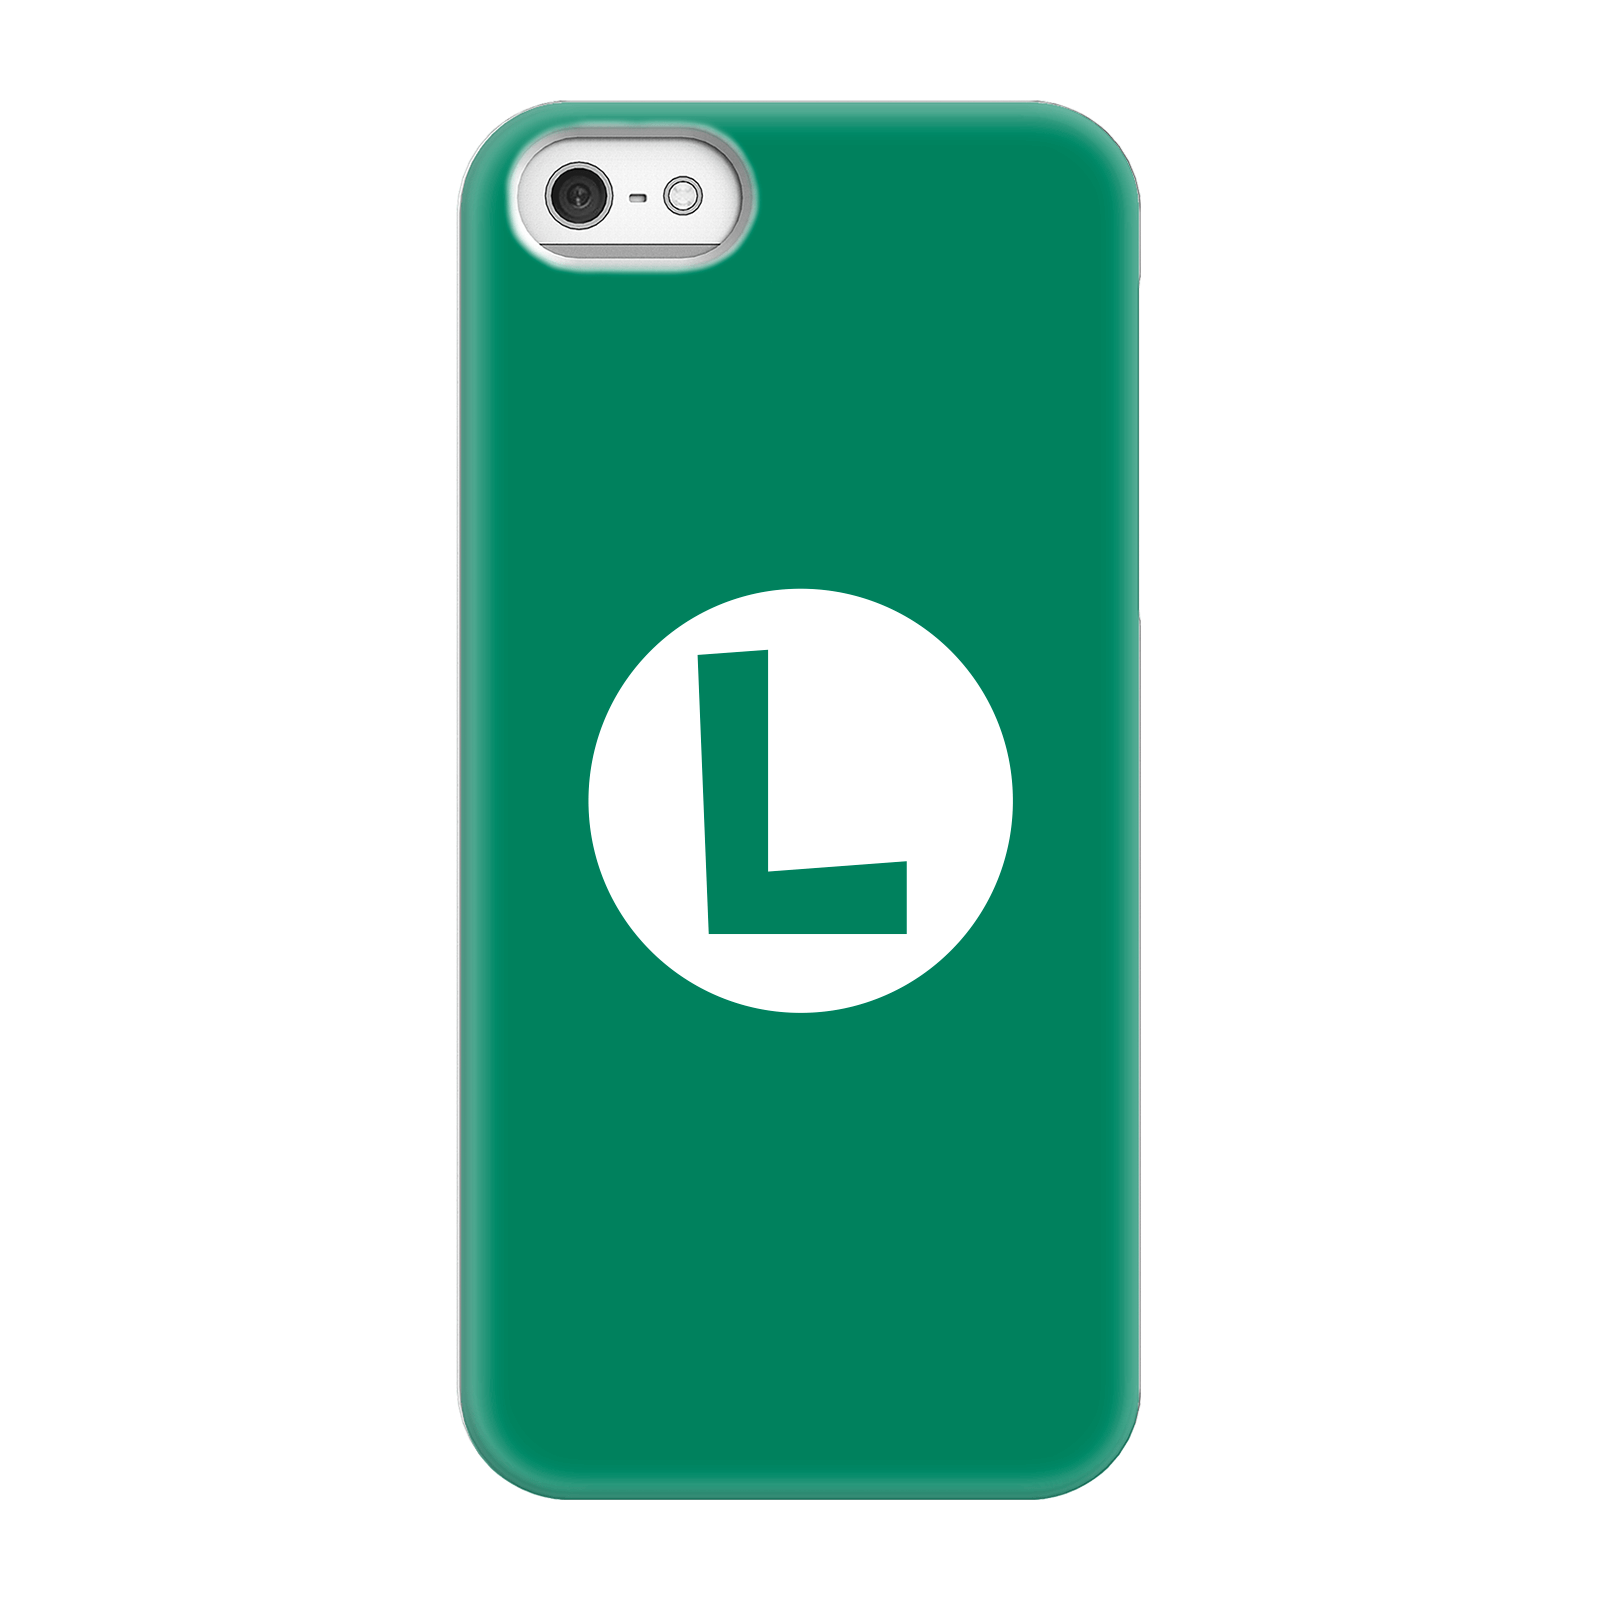 Nintendo Super Mario Luigi Logo Phone Case - iPhone 5/5s - Snap Case - Matte